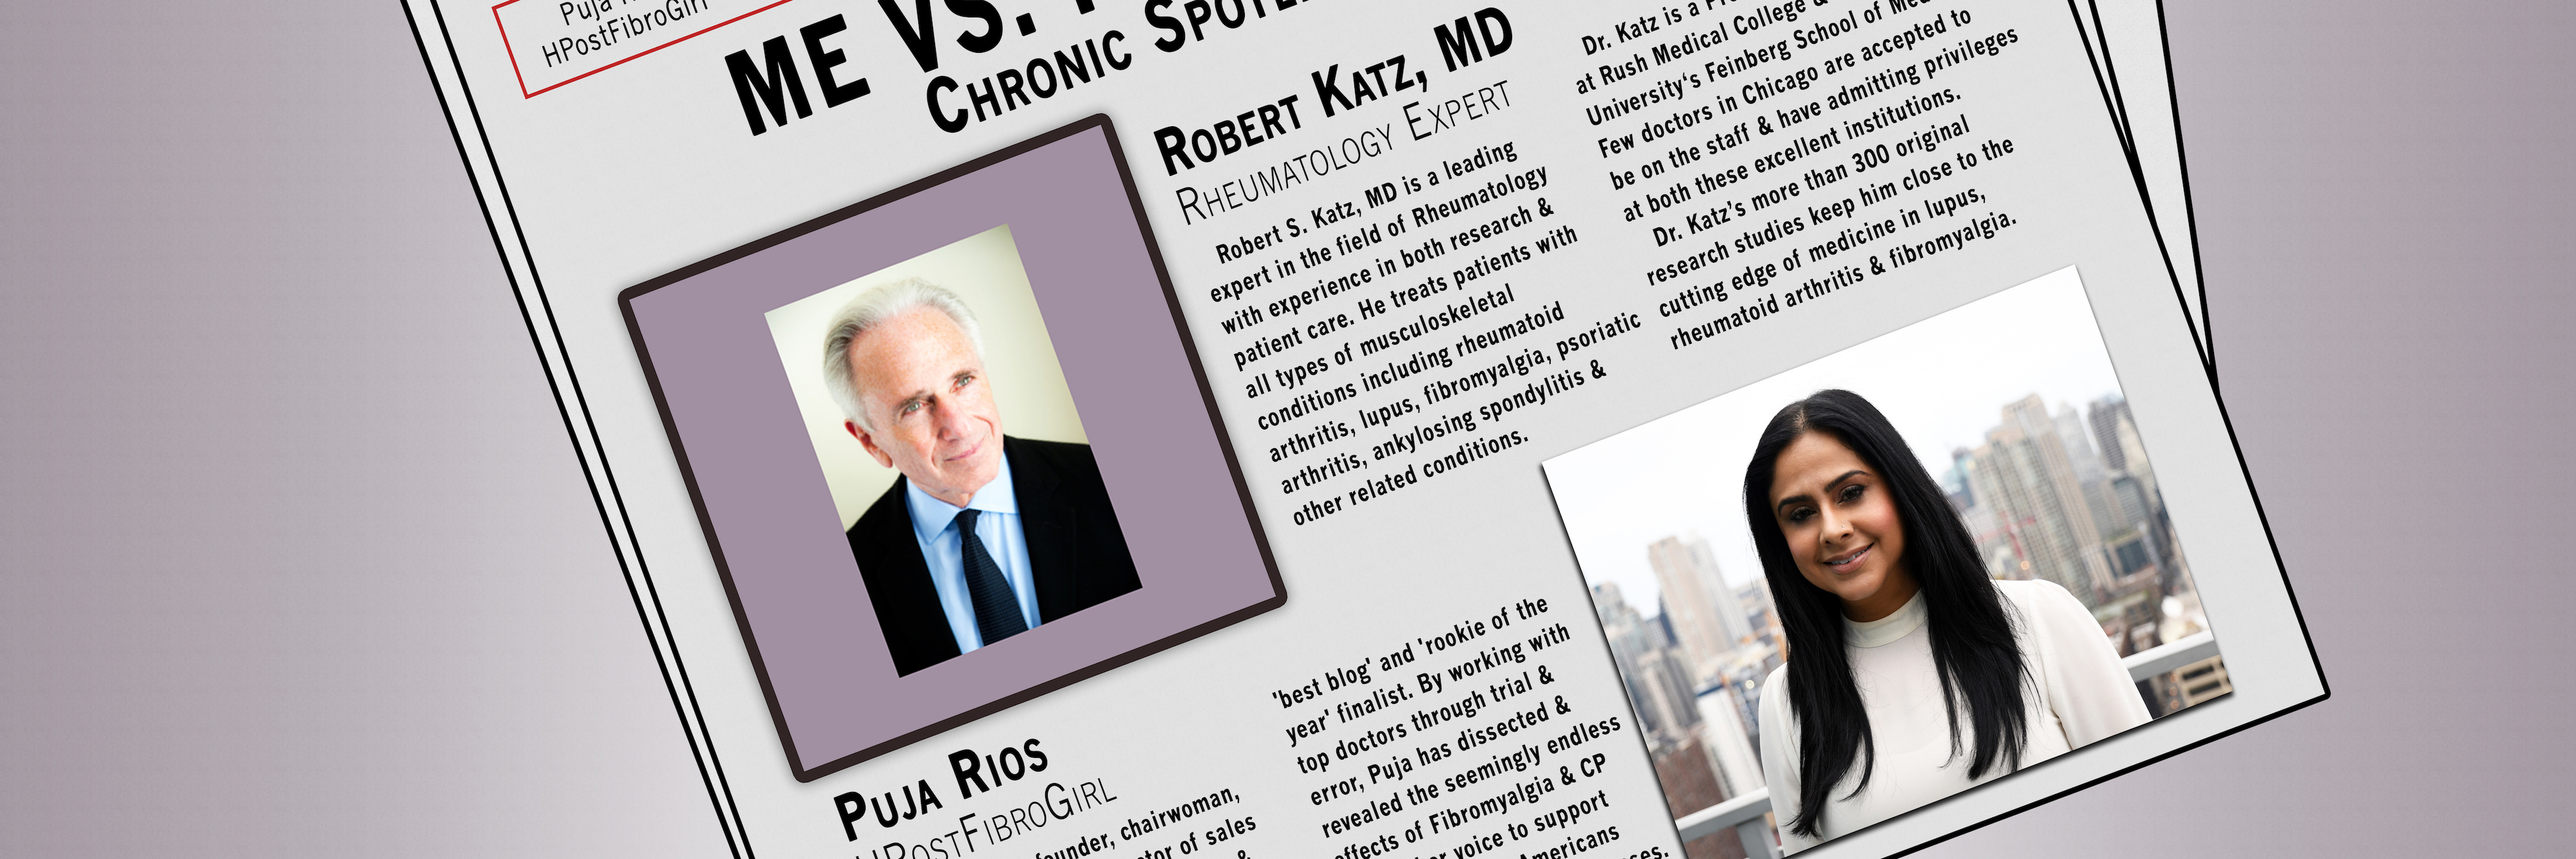 chronic spotlight series with puja rios and dr. robert katz